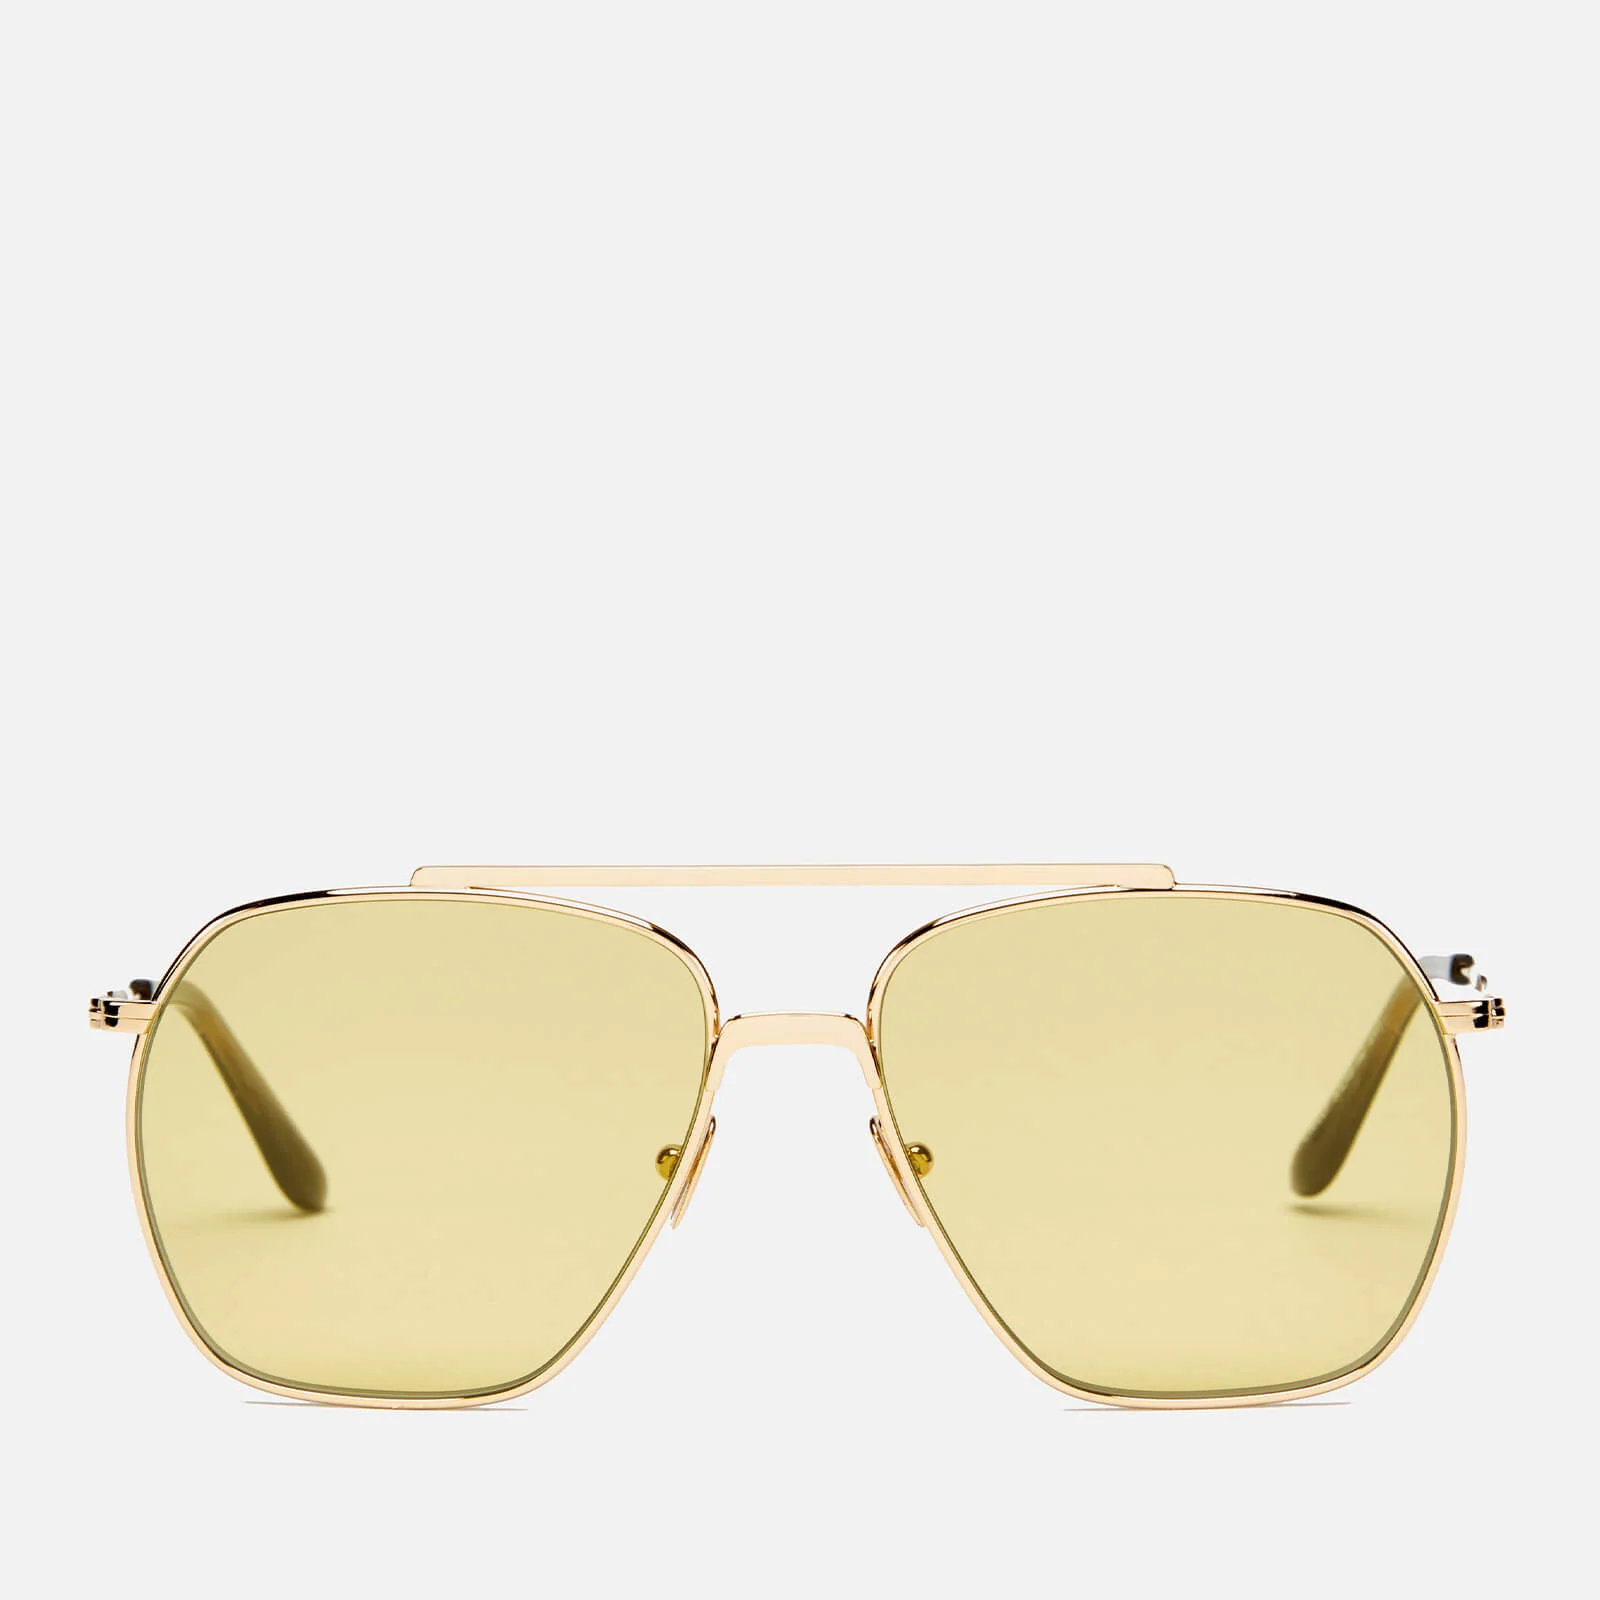 Acne Studios Men's Anteom Sunglasses - Gold/Yellow Image 1